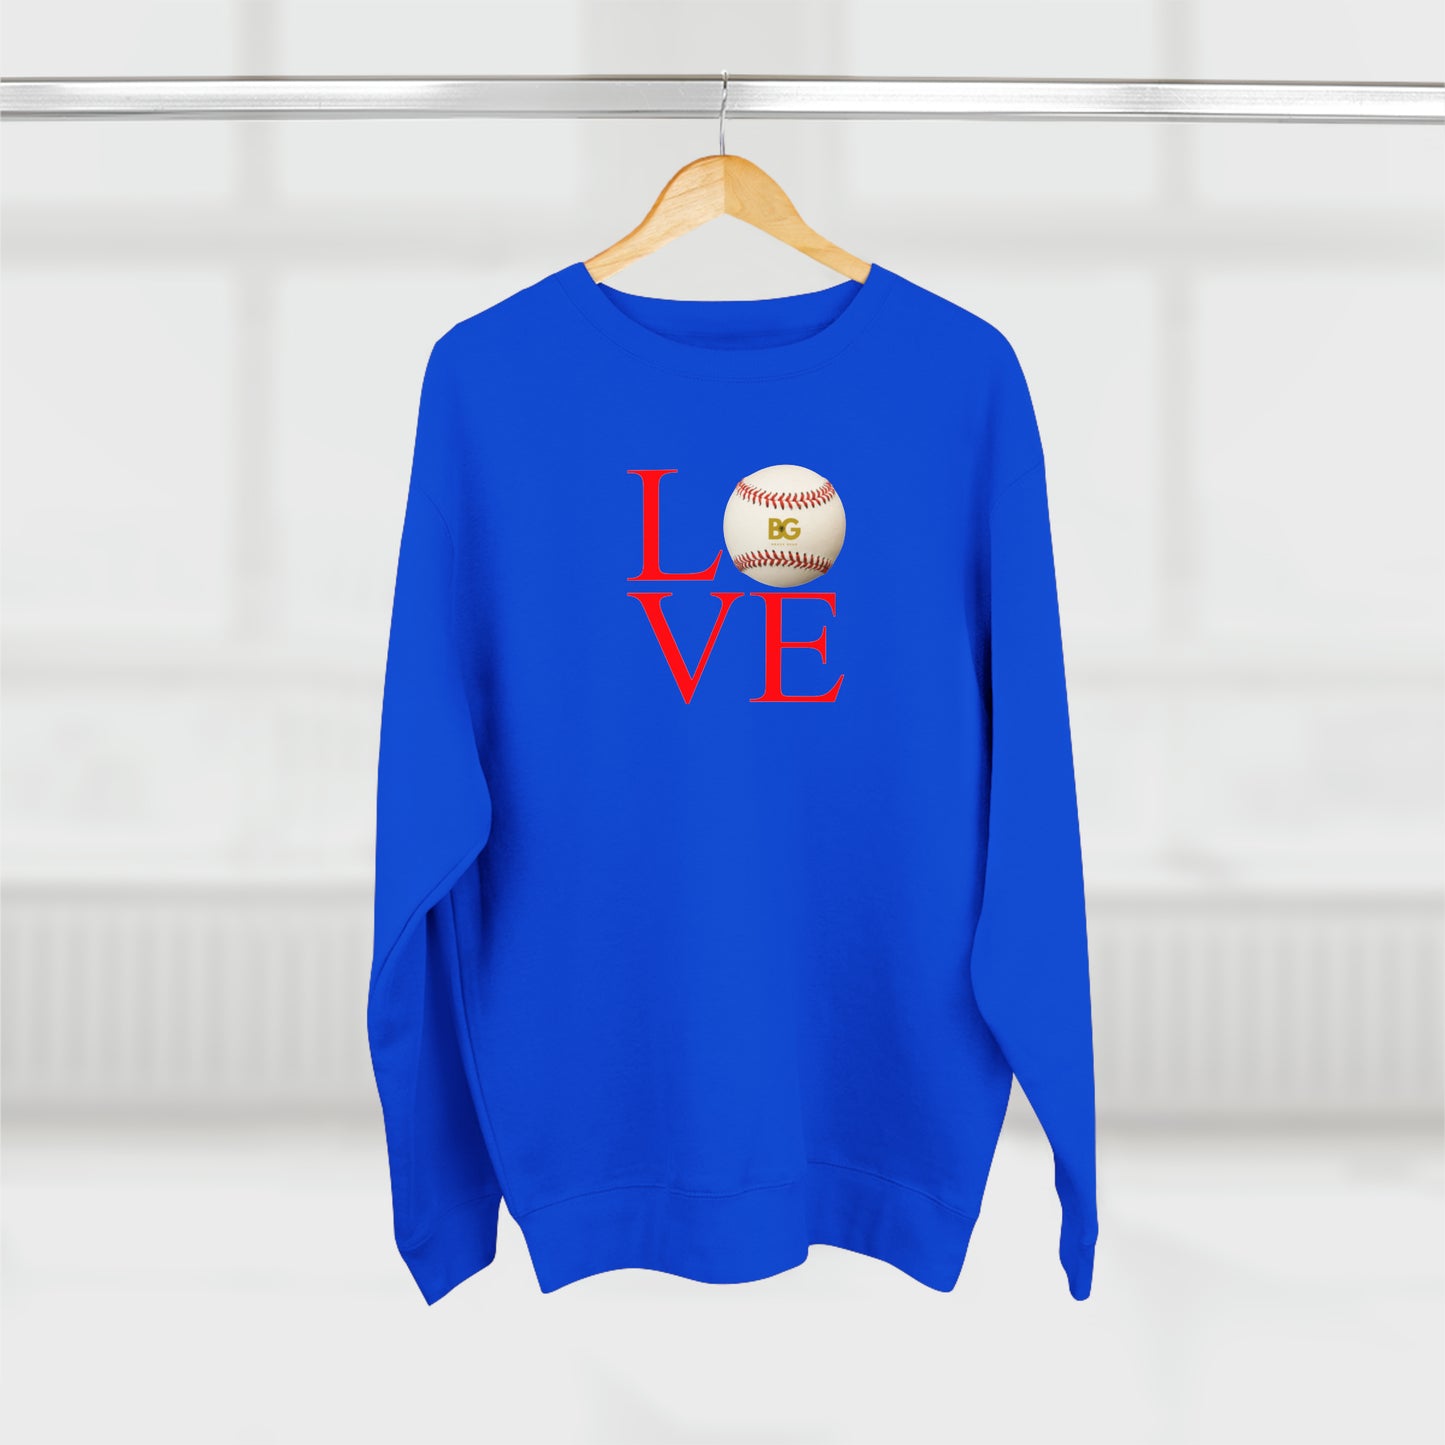 BG "LOVE baseball" Premium Crewneck Sweatshirt